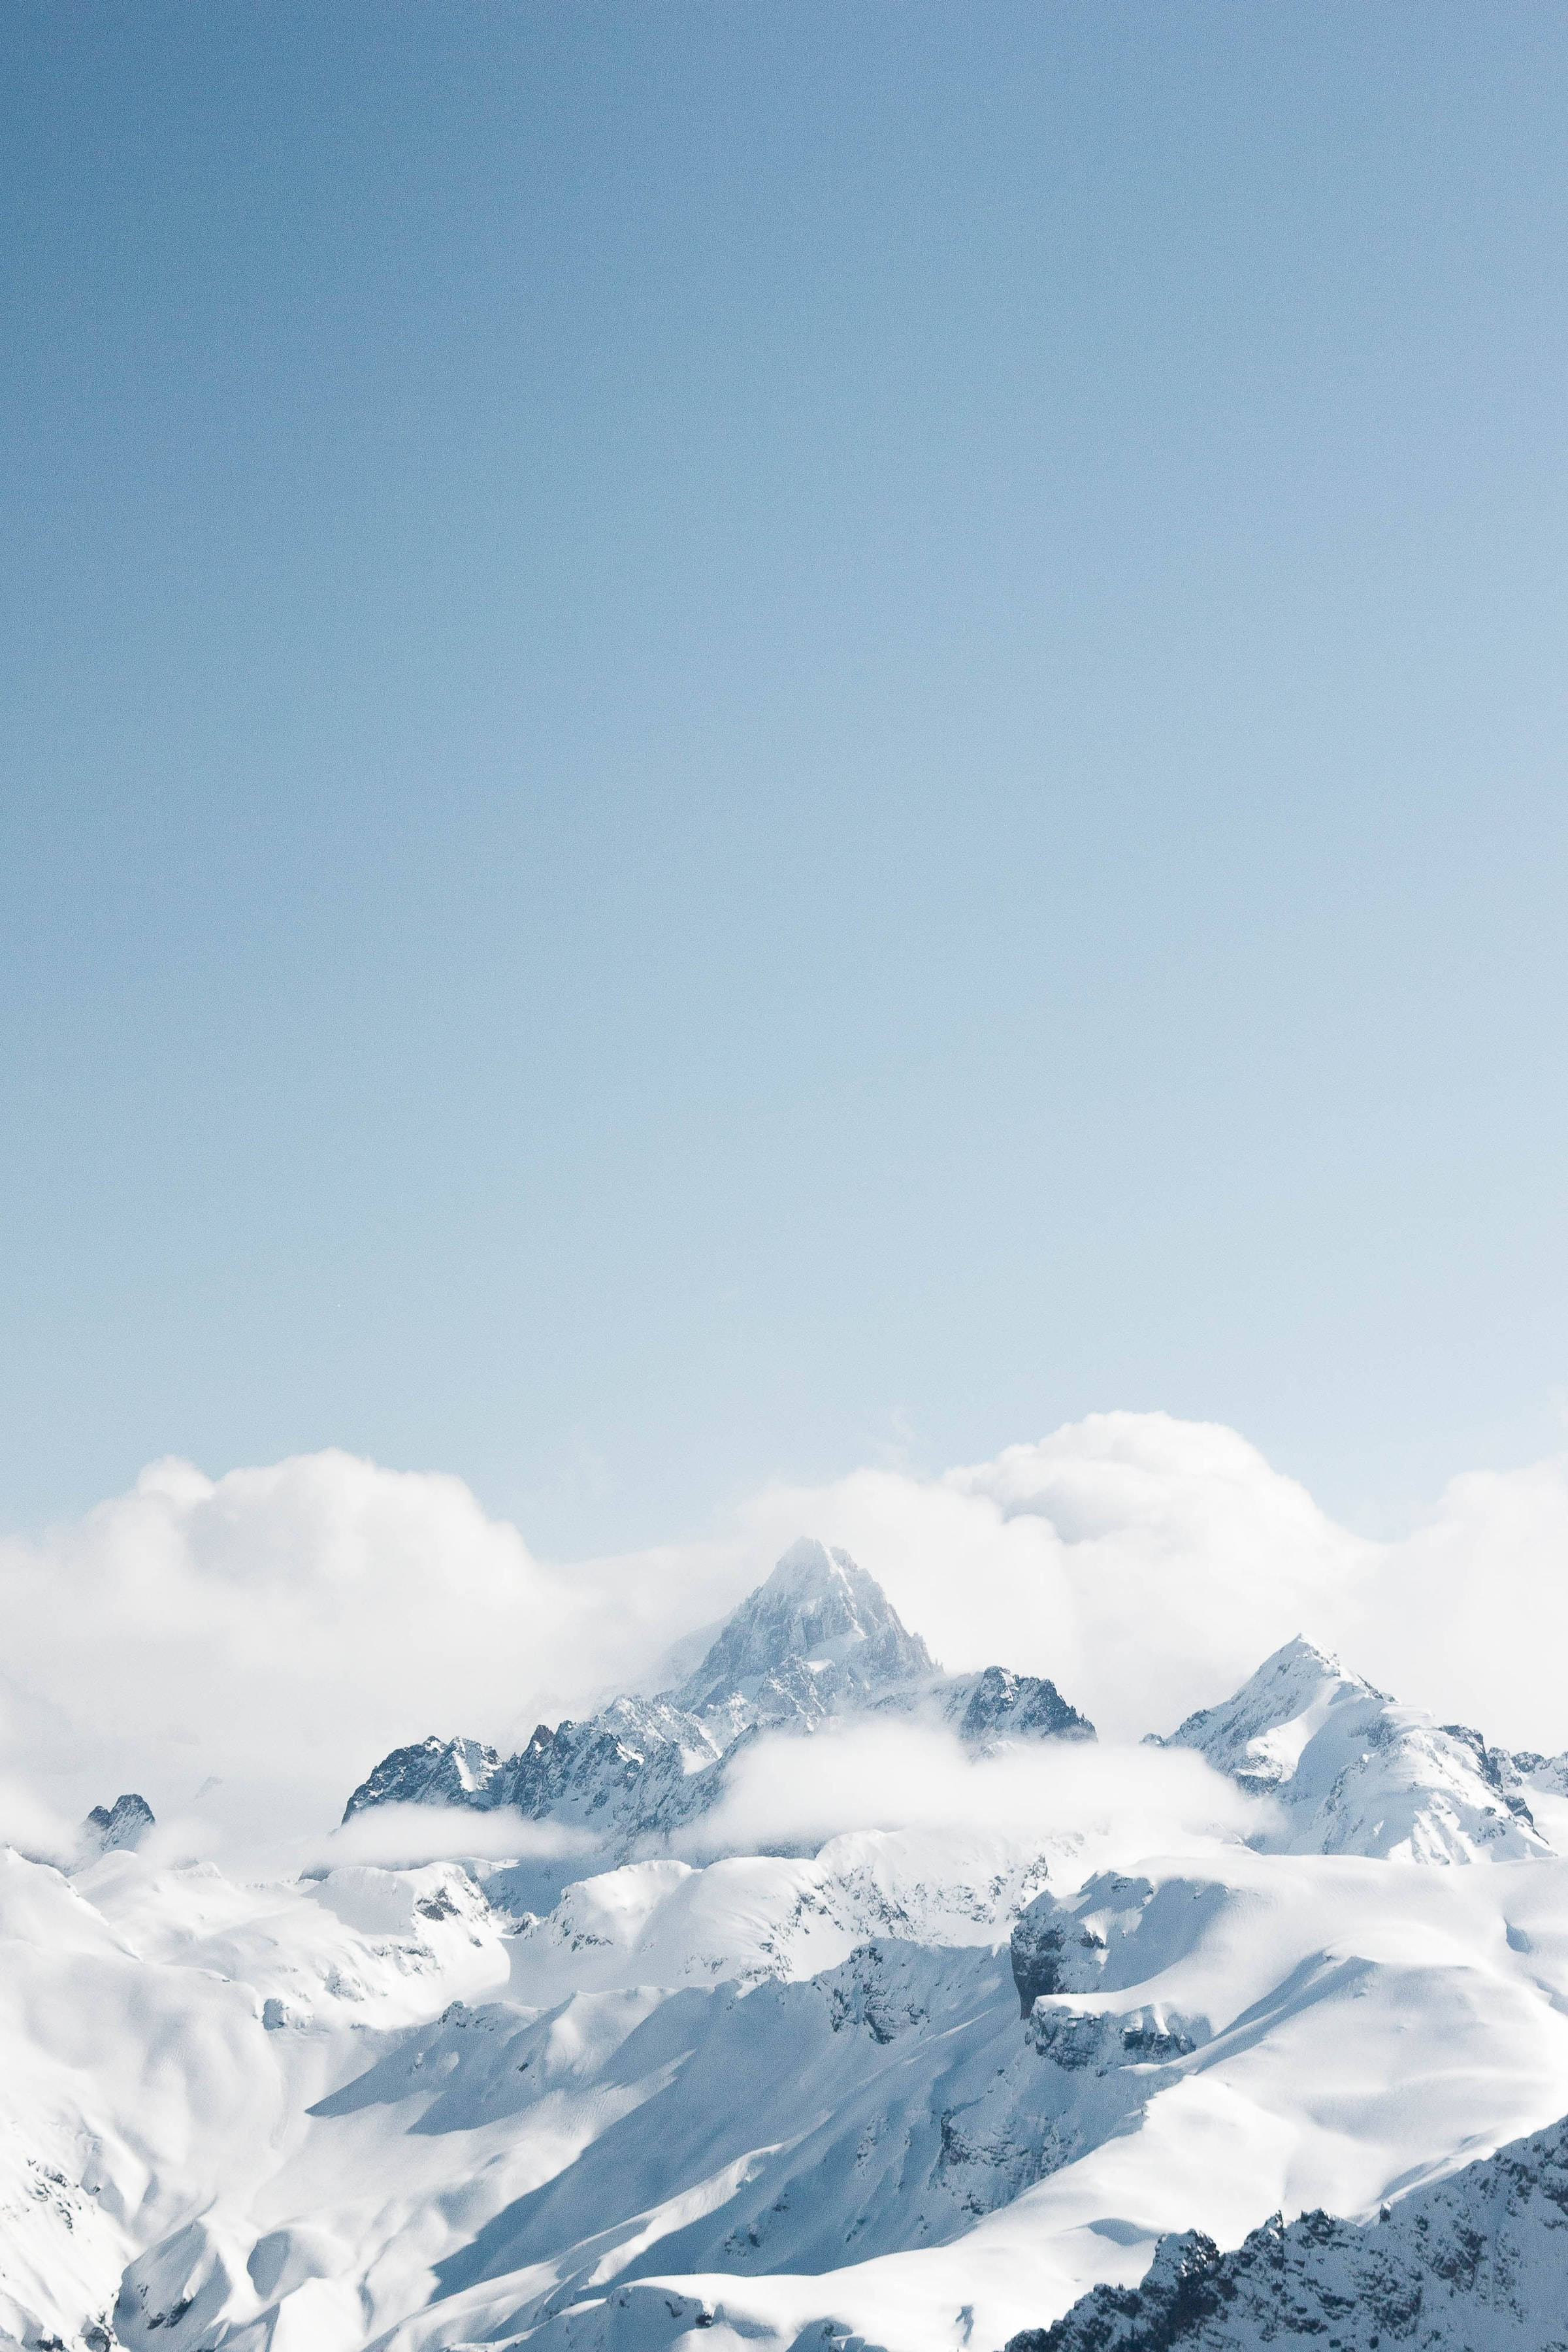 Caption: Enchanting Blue Aesthetic- Mountain Snow Under The Sky